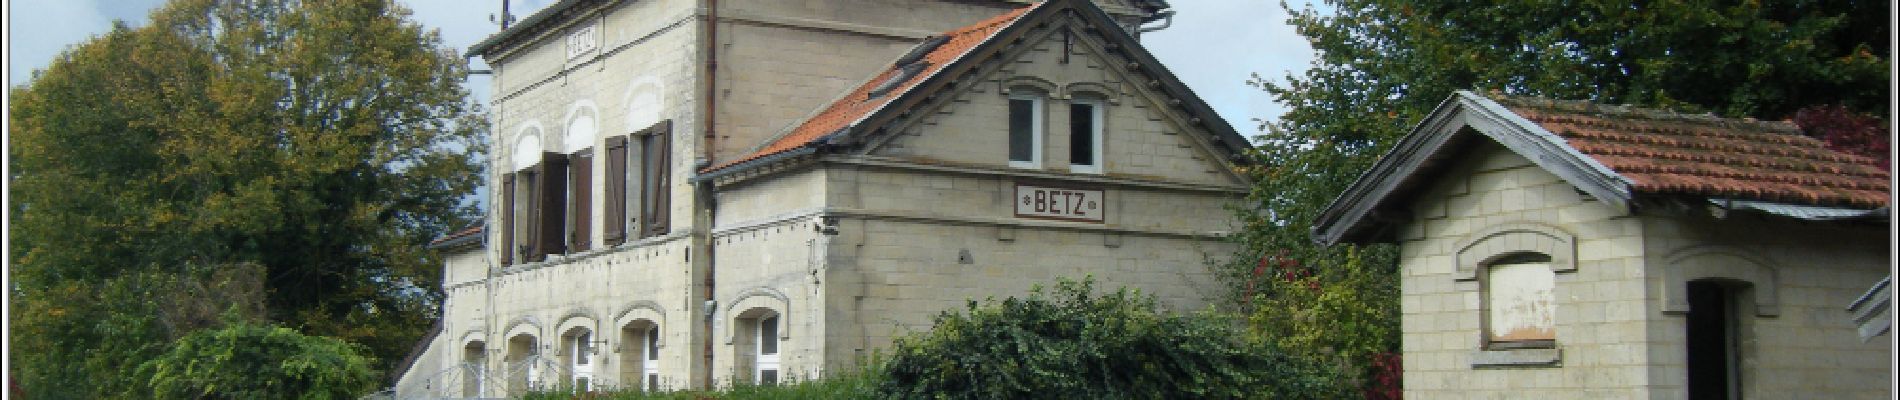 Point of interest Betz - Ancienne gare de Betz - Photo